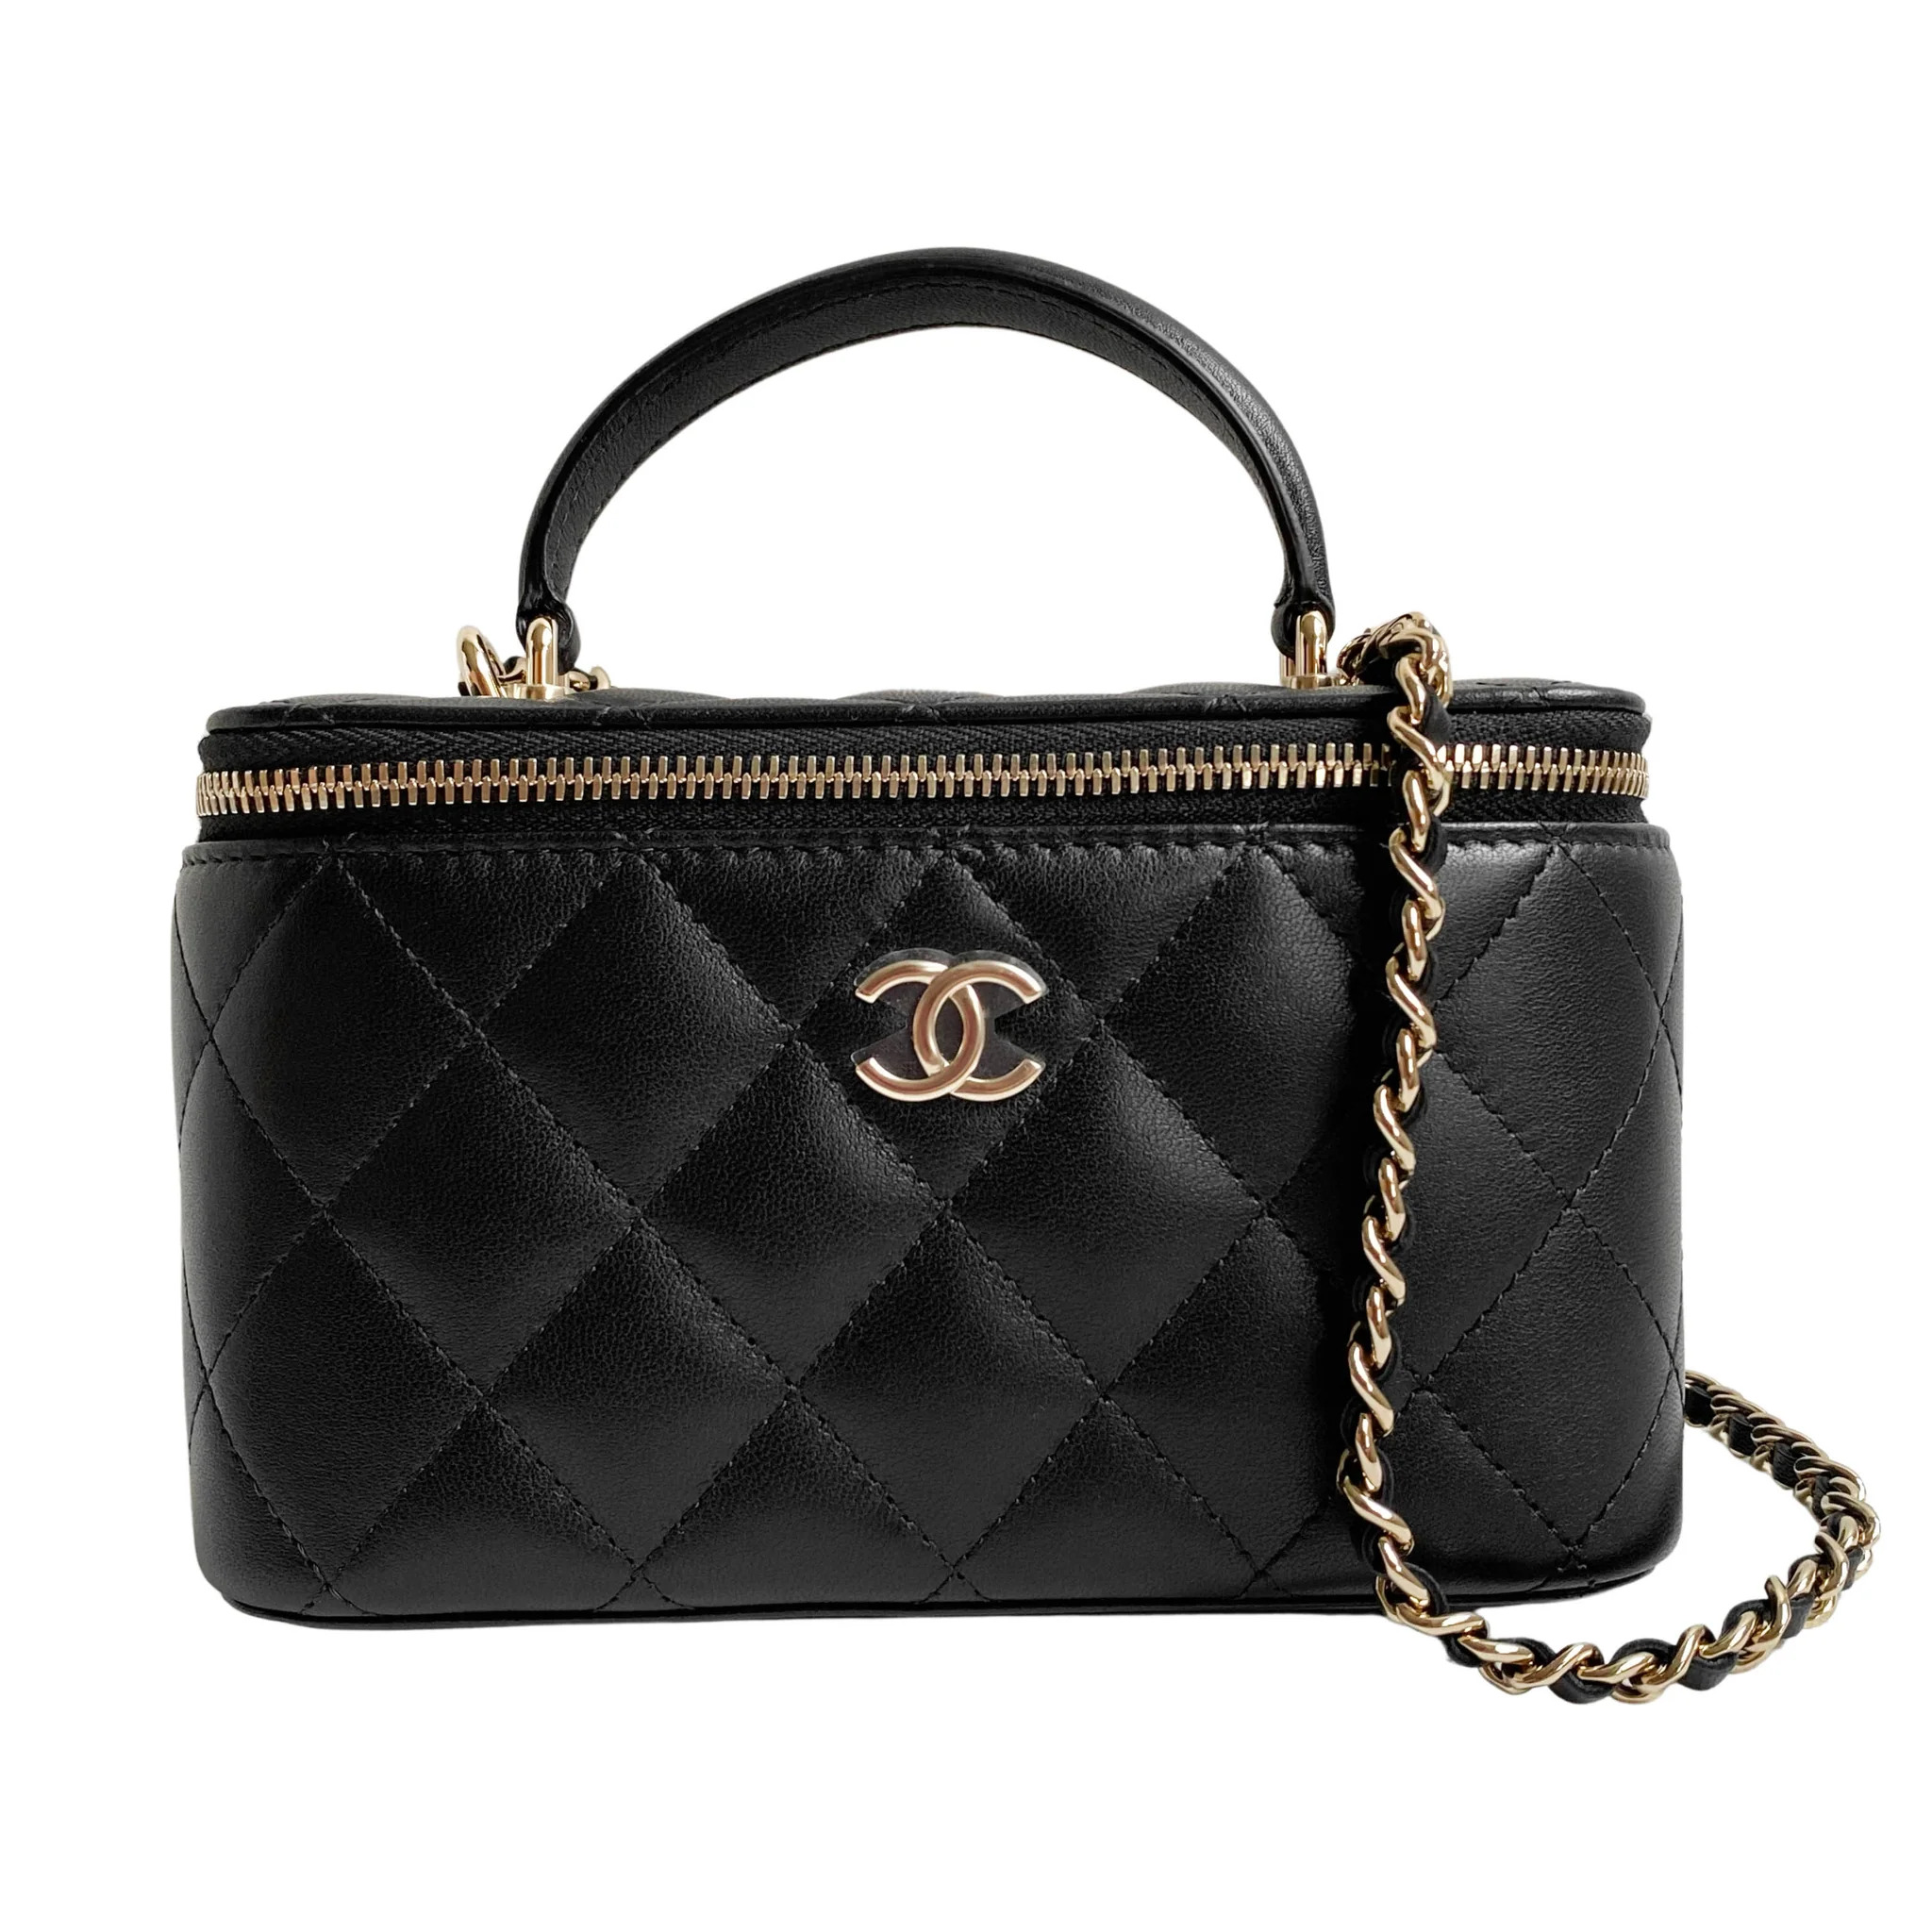 Kris Bernal's Favorite Designer Items Include a P200,000 Chanel